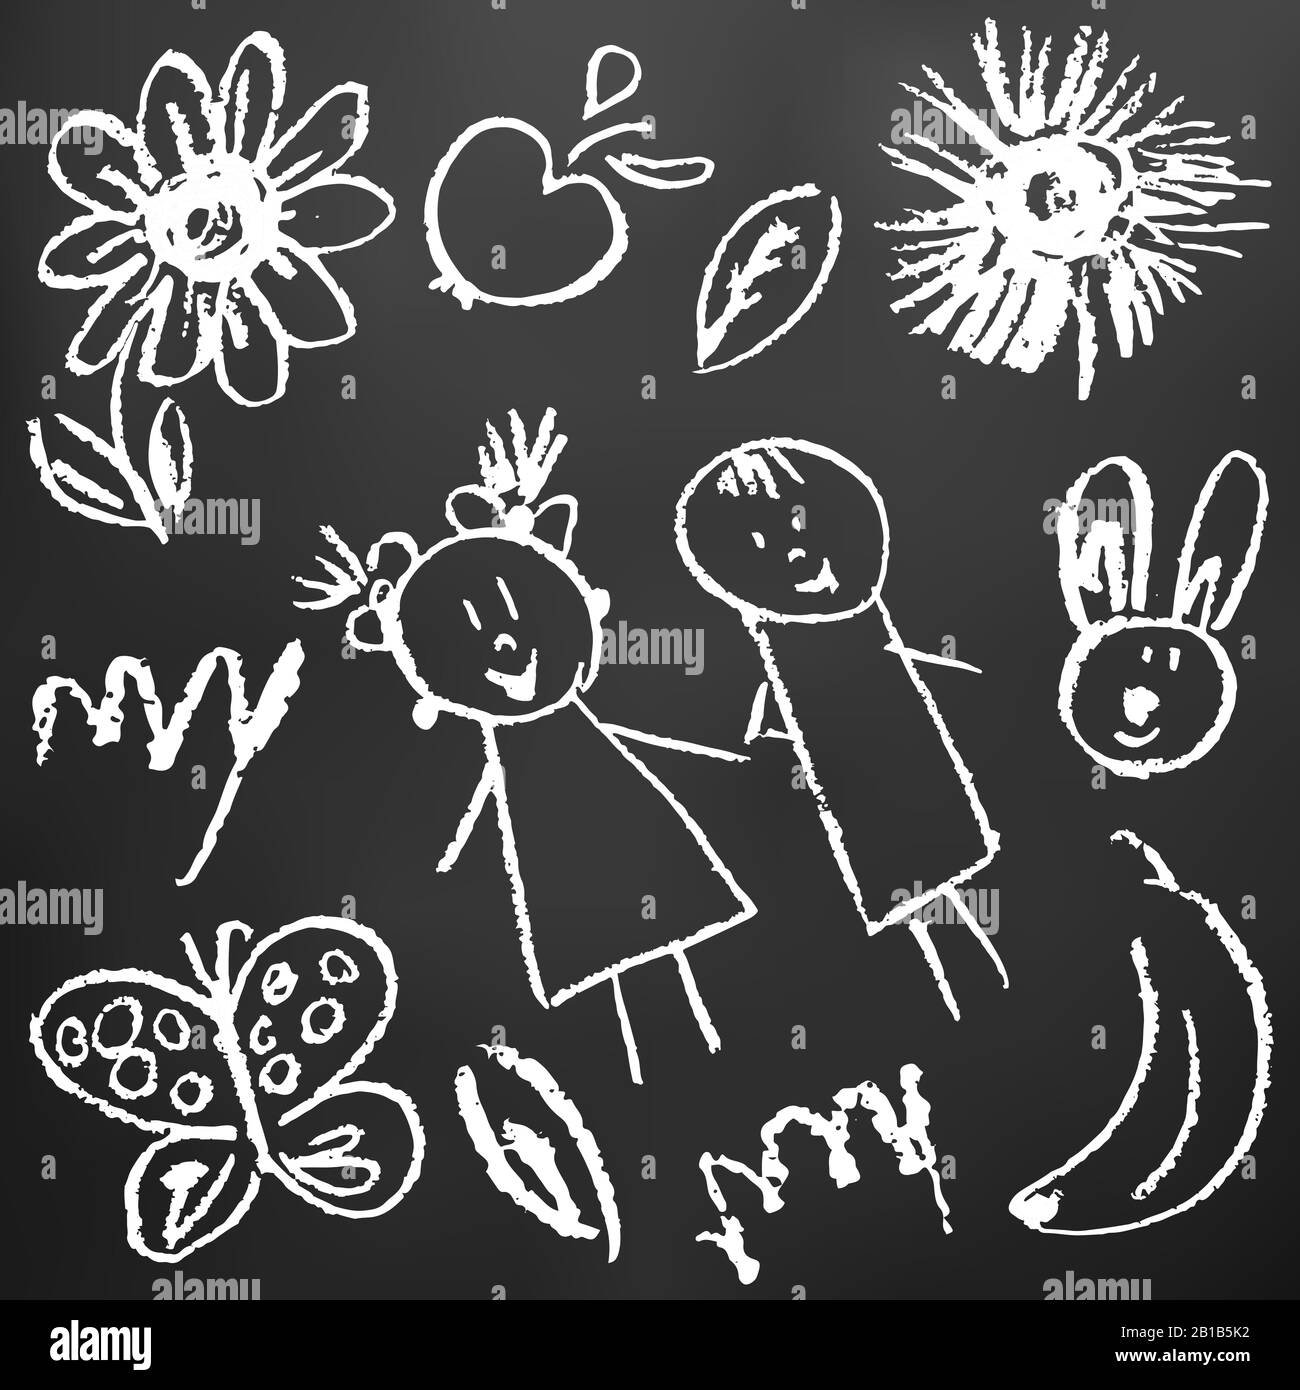 Детские рисунки мелками на доске